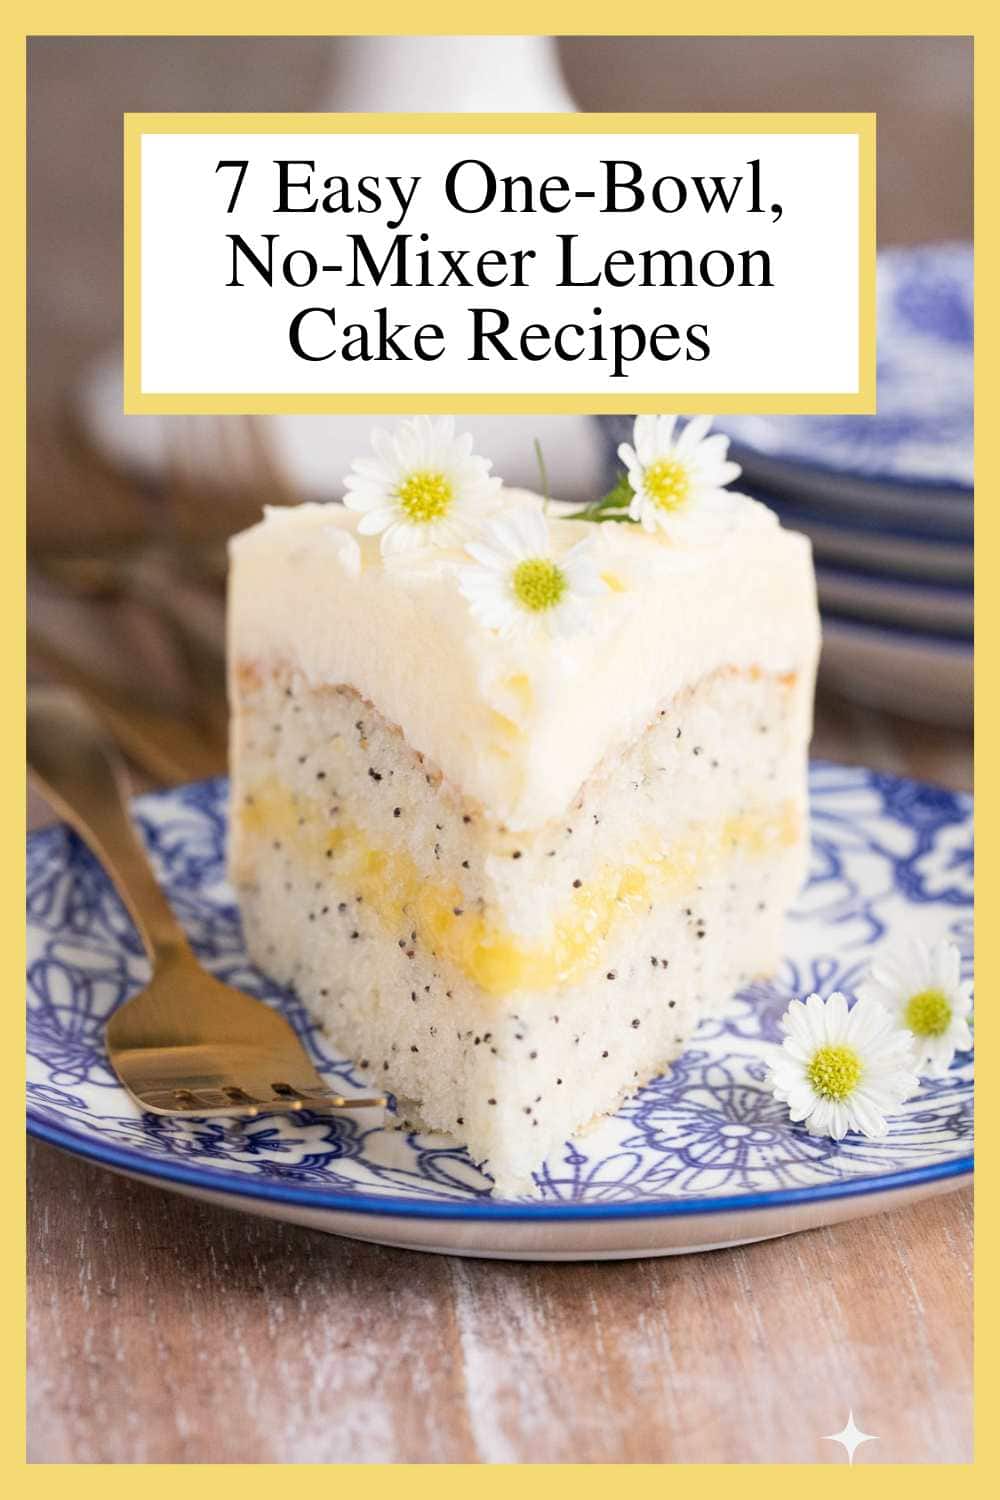 Life Giving You Lemons? 7 Easy One-Bowl Lemon Cake Recipes to Sweeten Things Up!